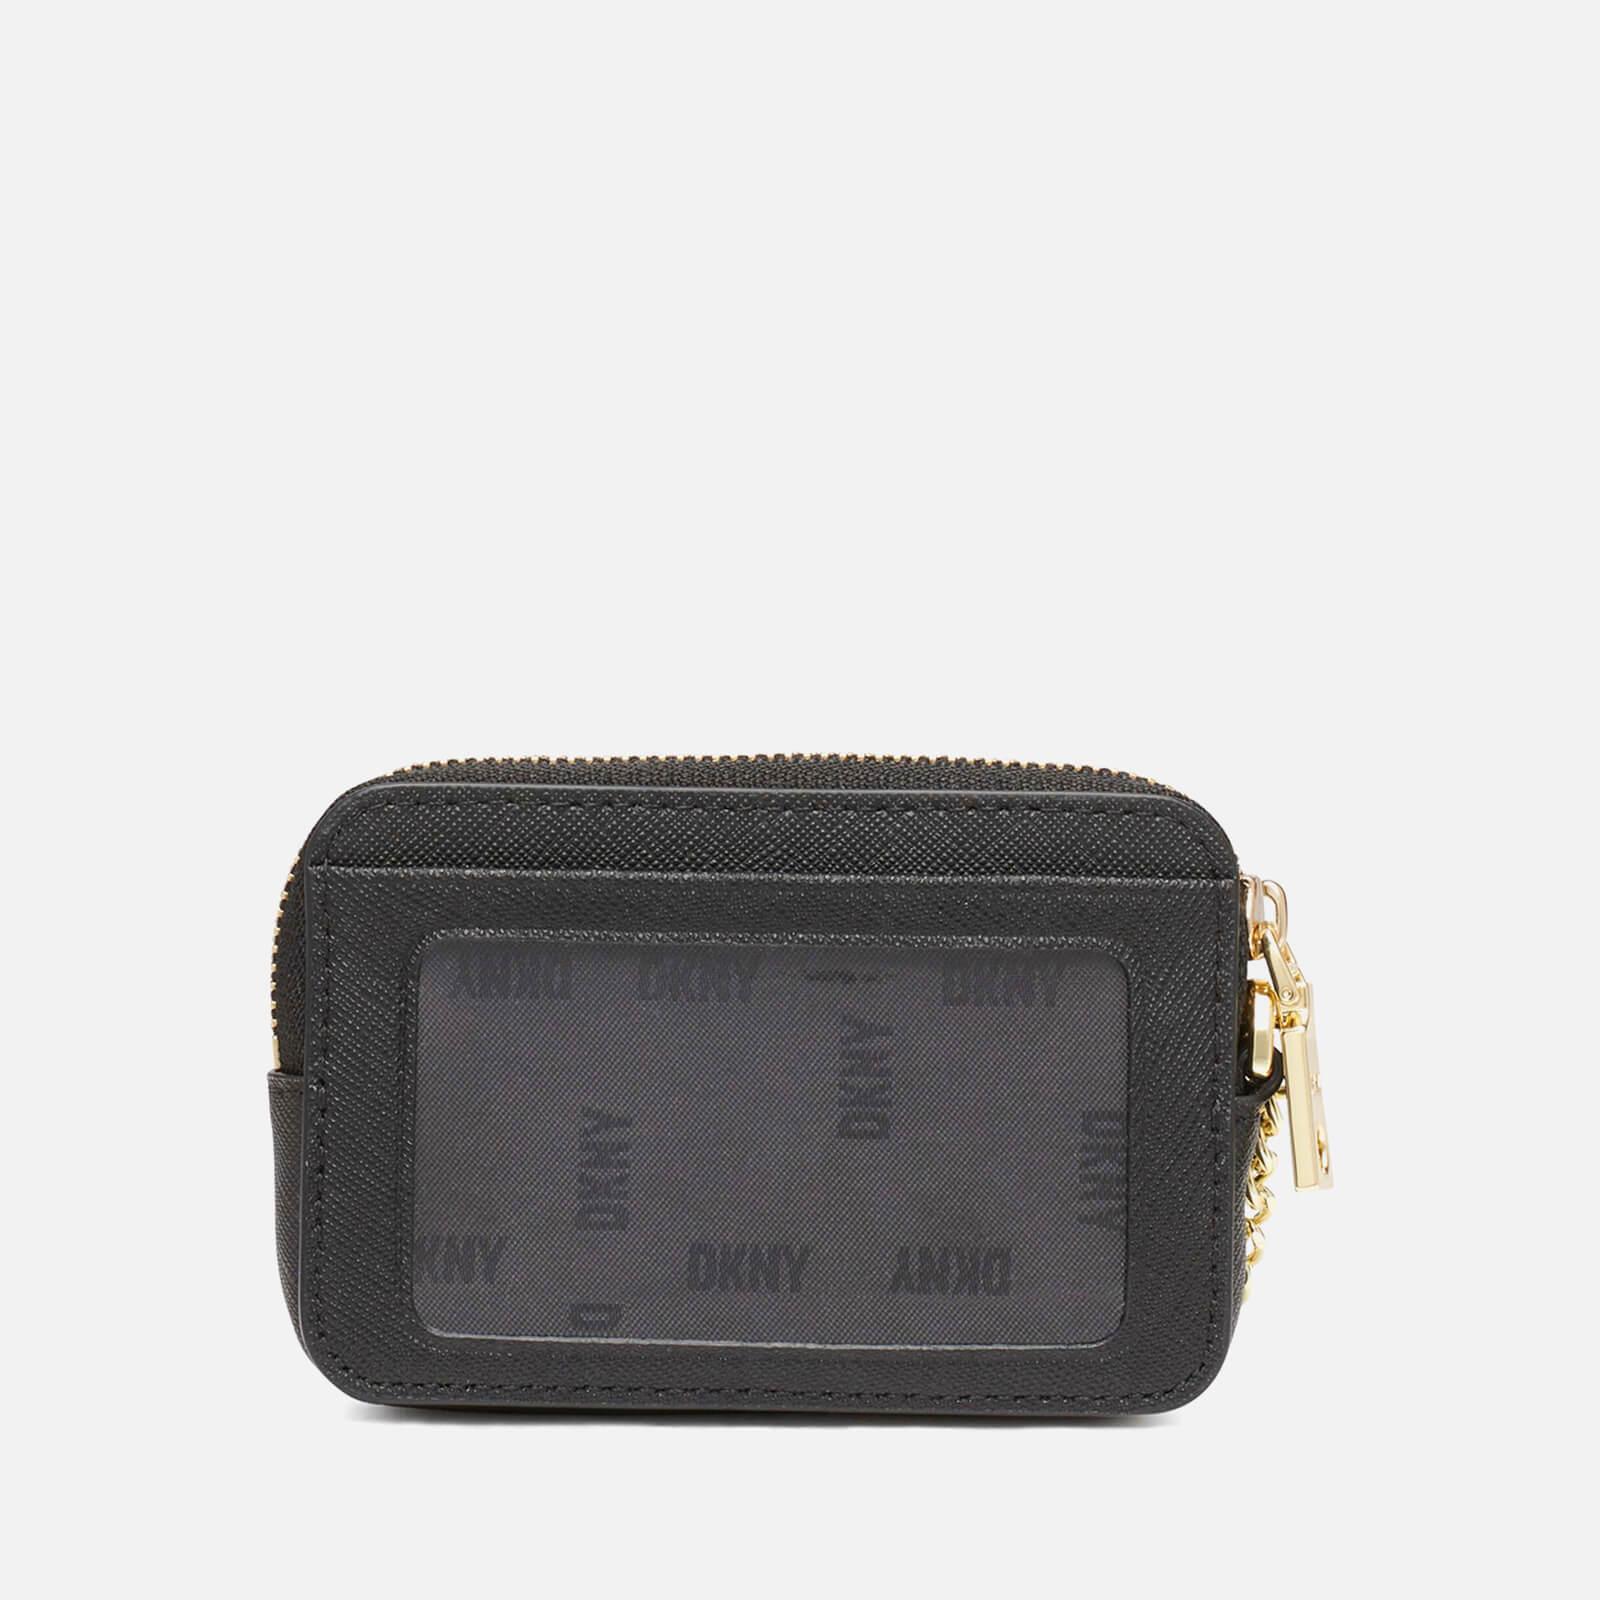 DKNY Chain Shoulder Bag Crossbody Detachable Strap w/ Ear Bud Coin Purse  Black for sale online | eBay